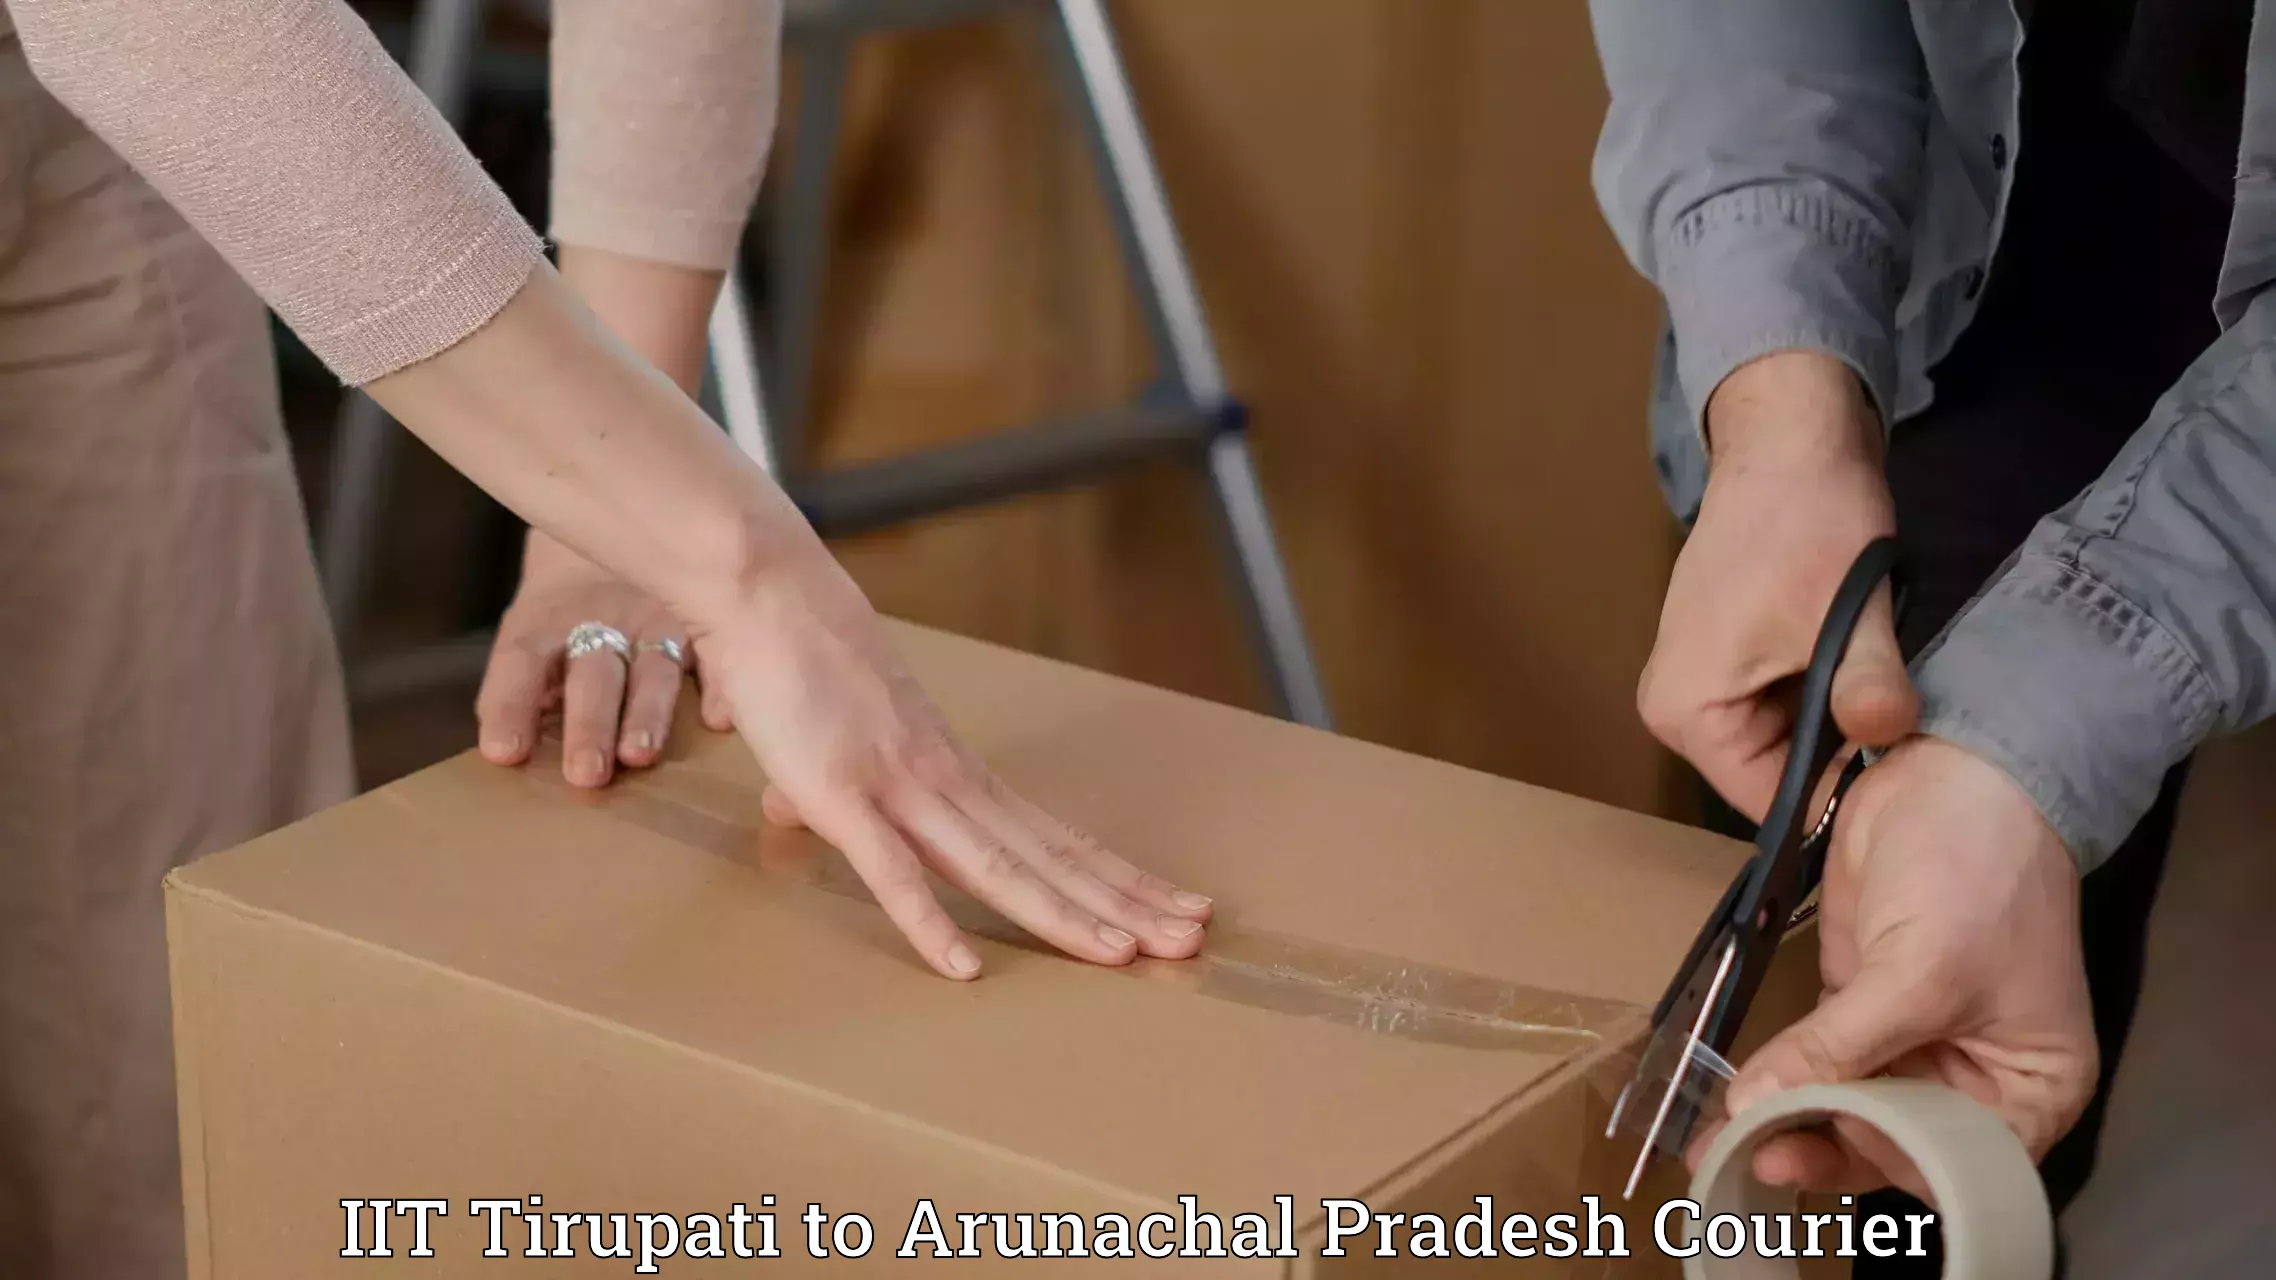 Easy access courier services IIT Tirupati to Arunachal Pradesh